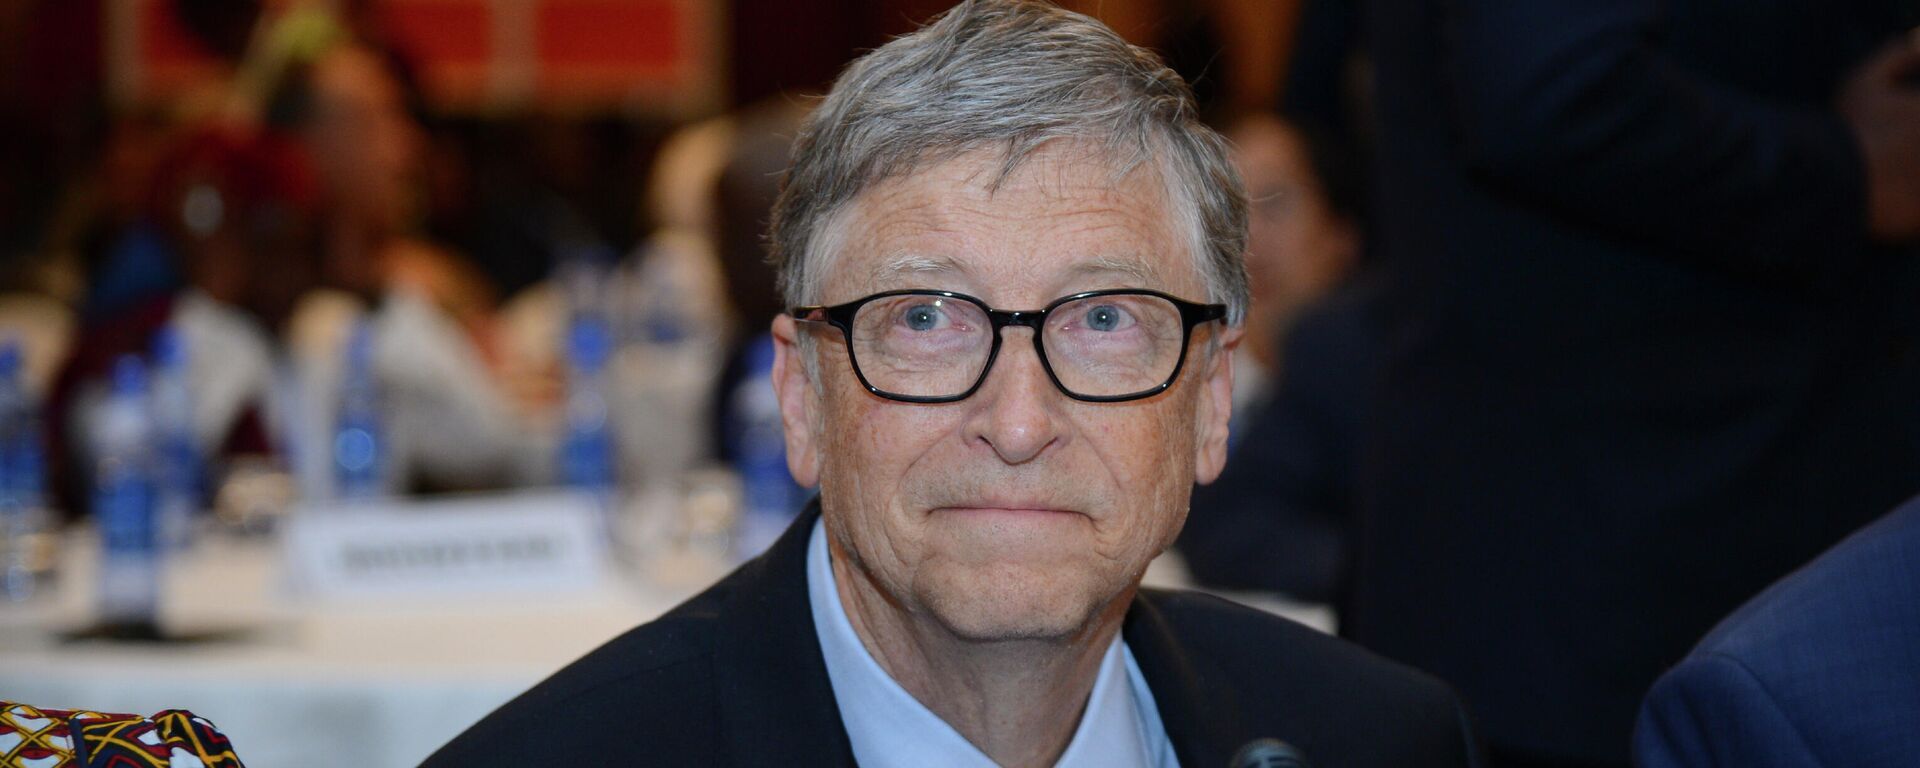 El cofundador de Microsoft, Bill Gates - Sputnik Mundo, 1920, 20.03.2021